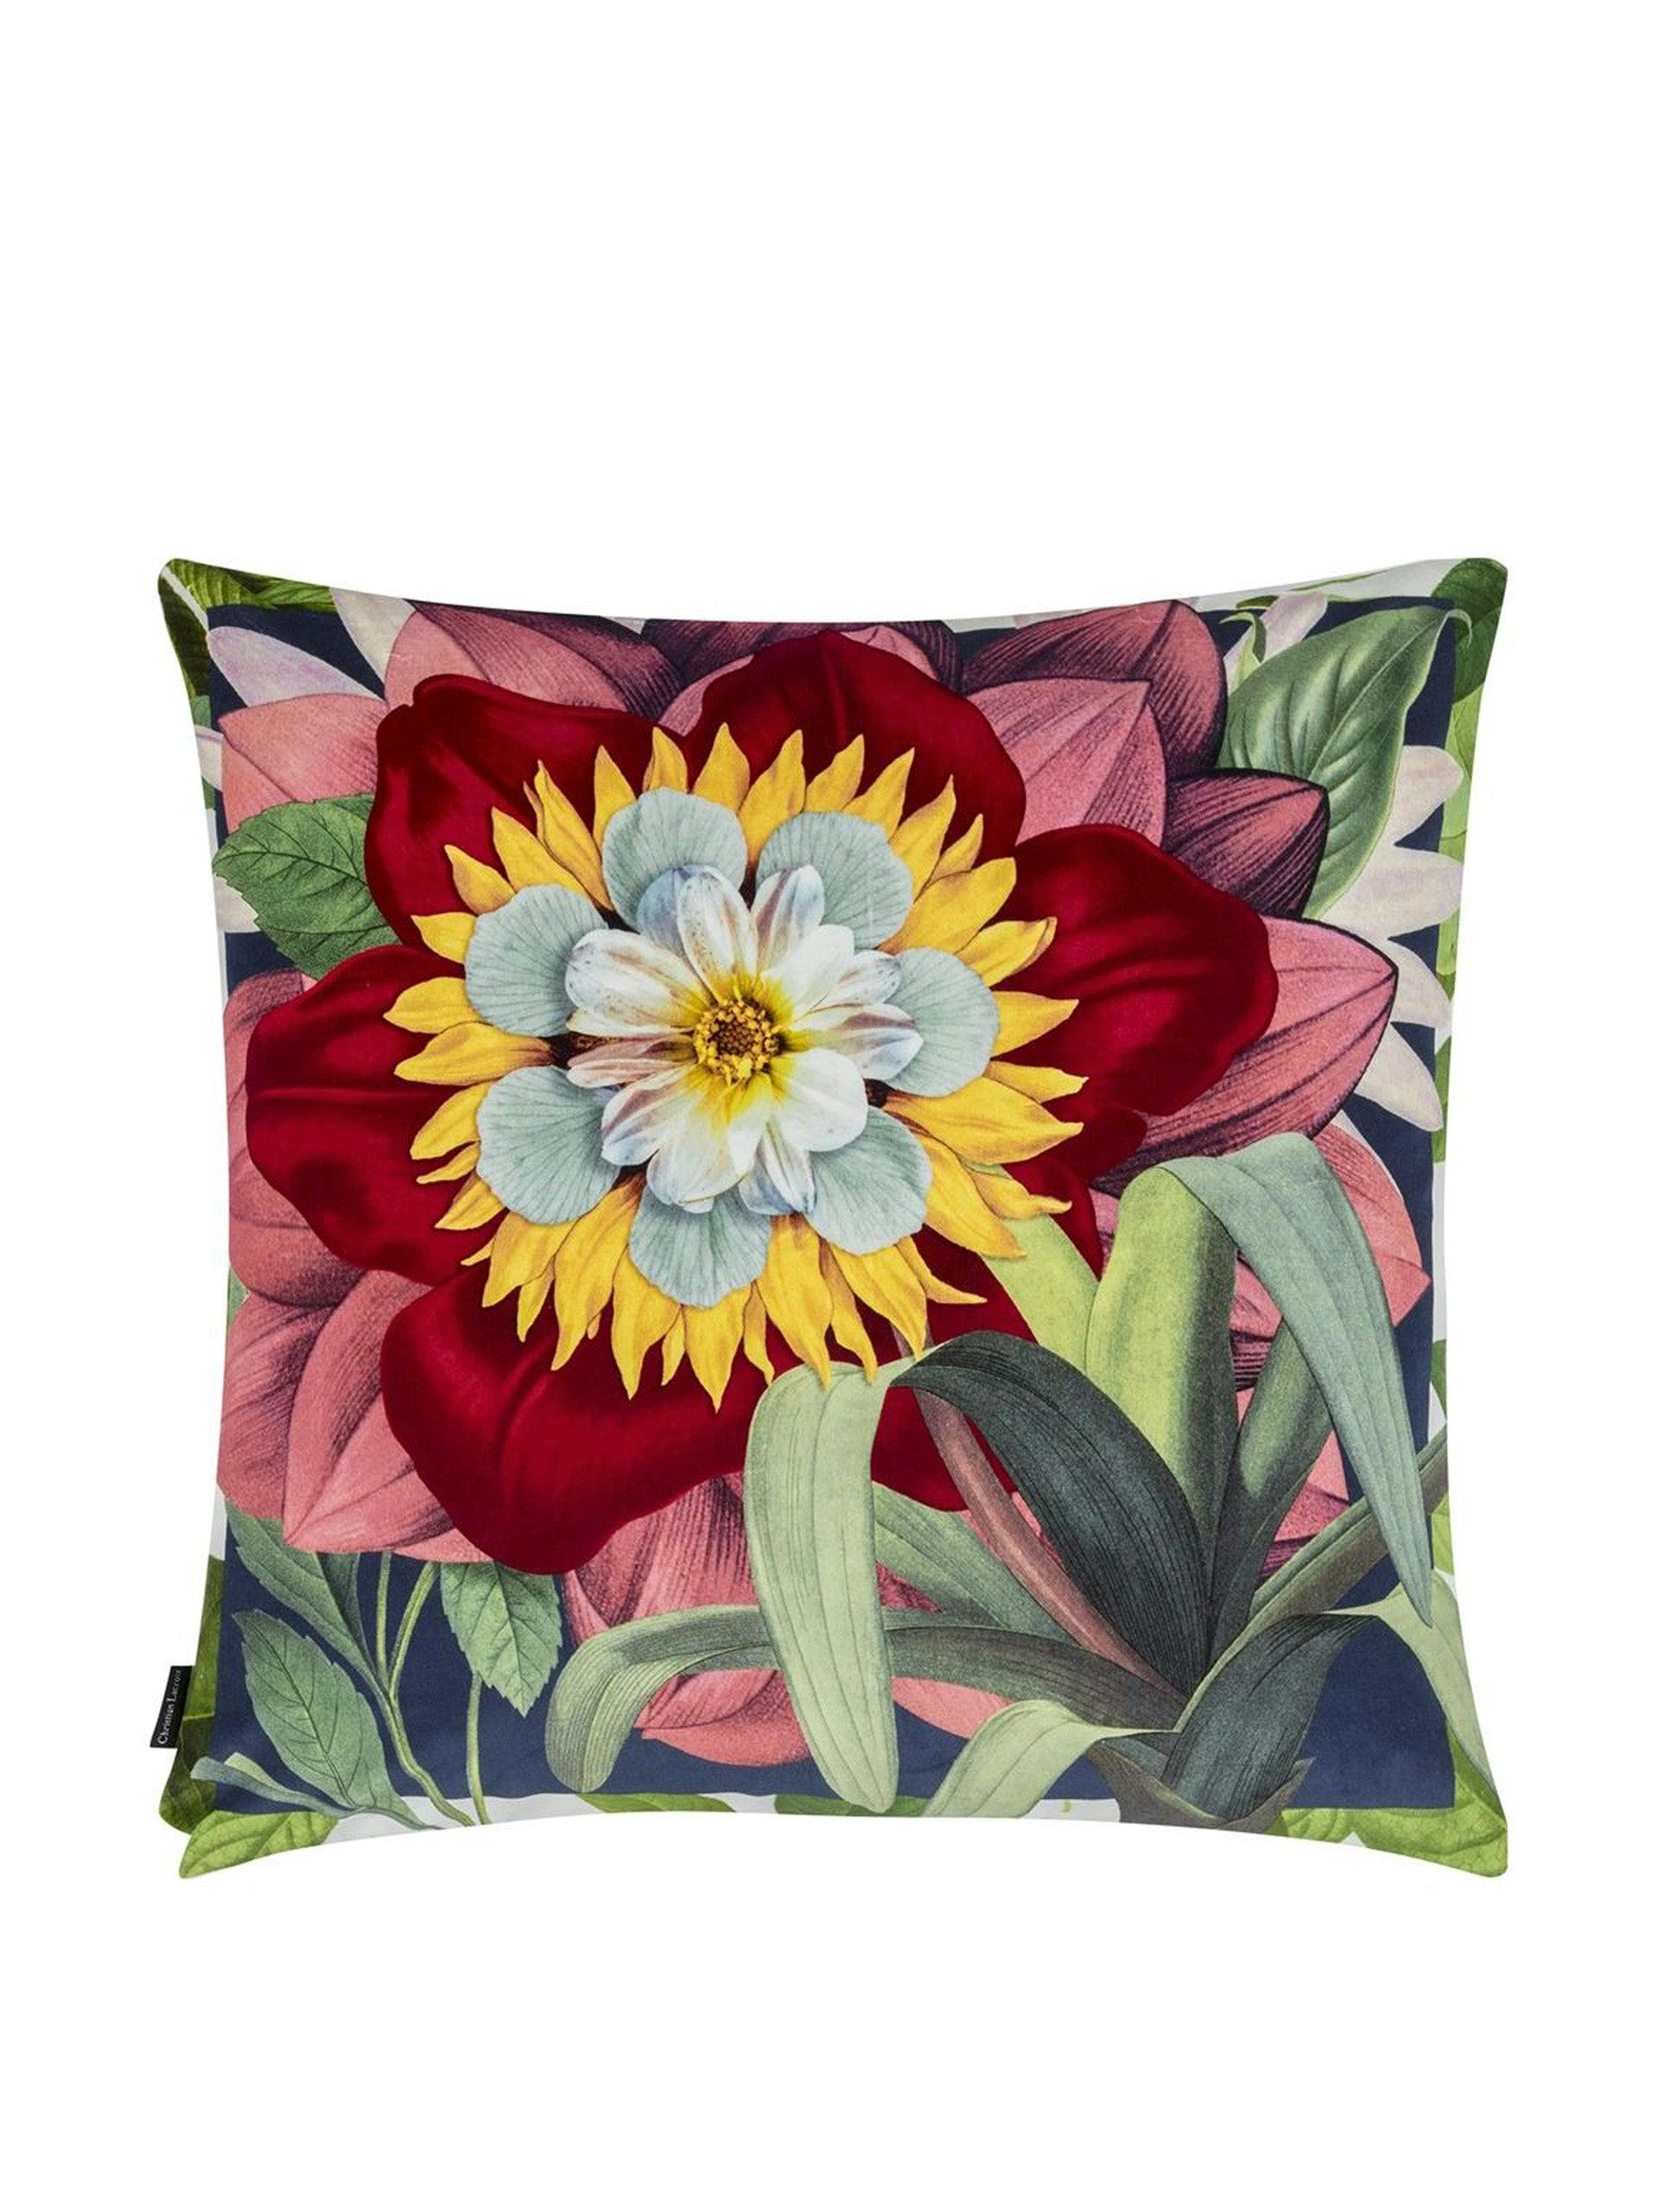 Flowerworks cushion